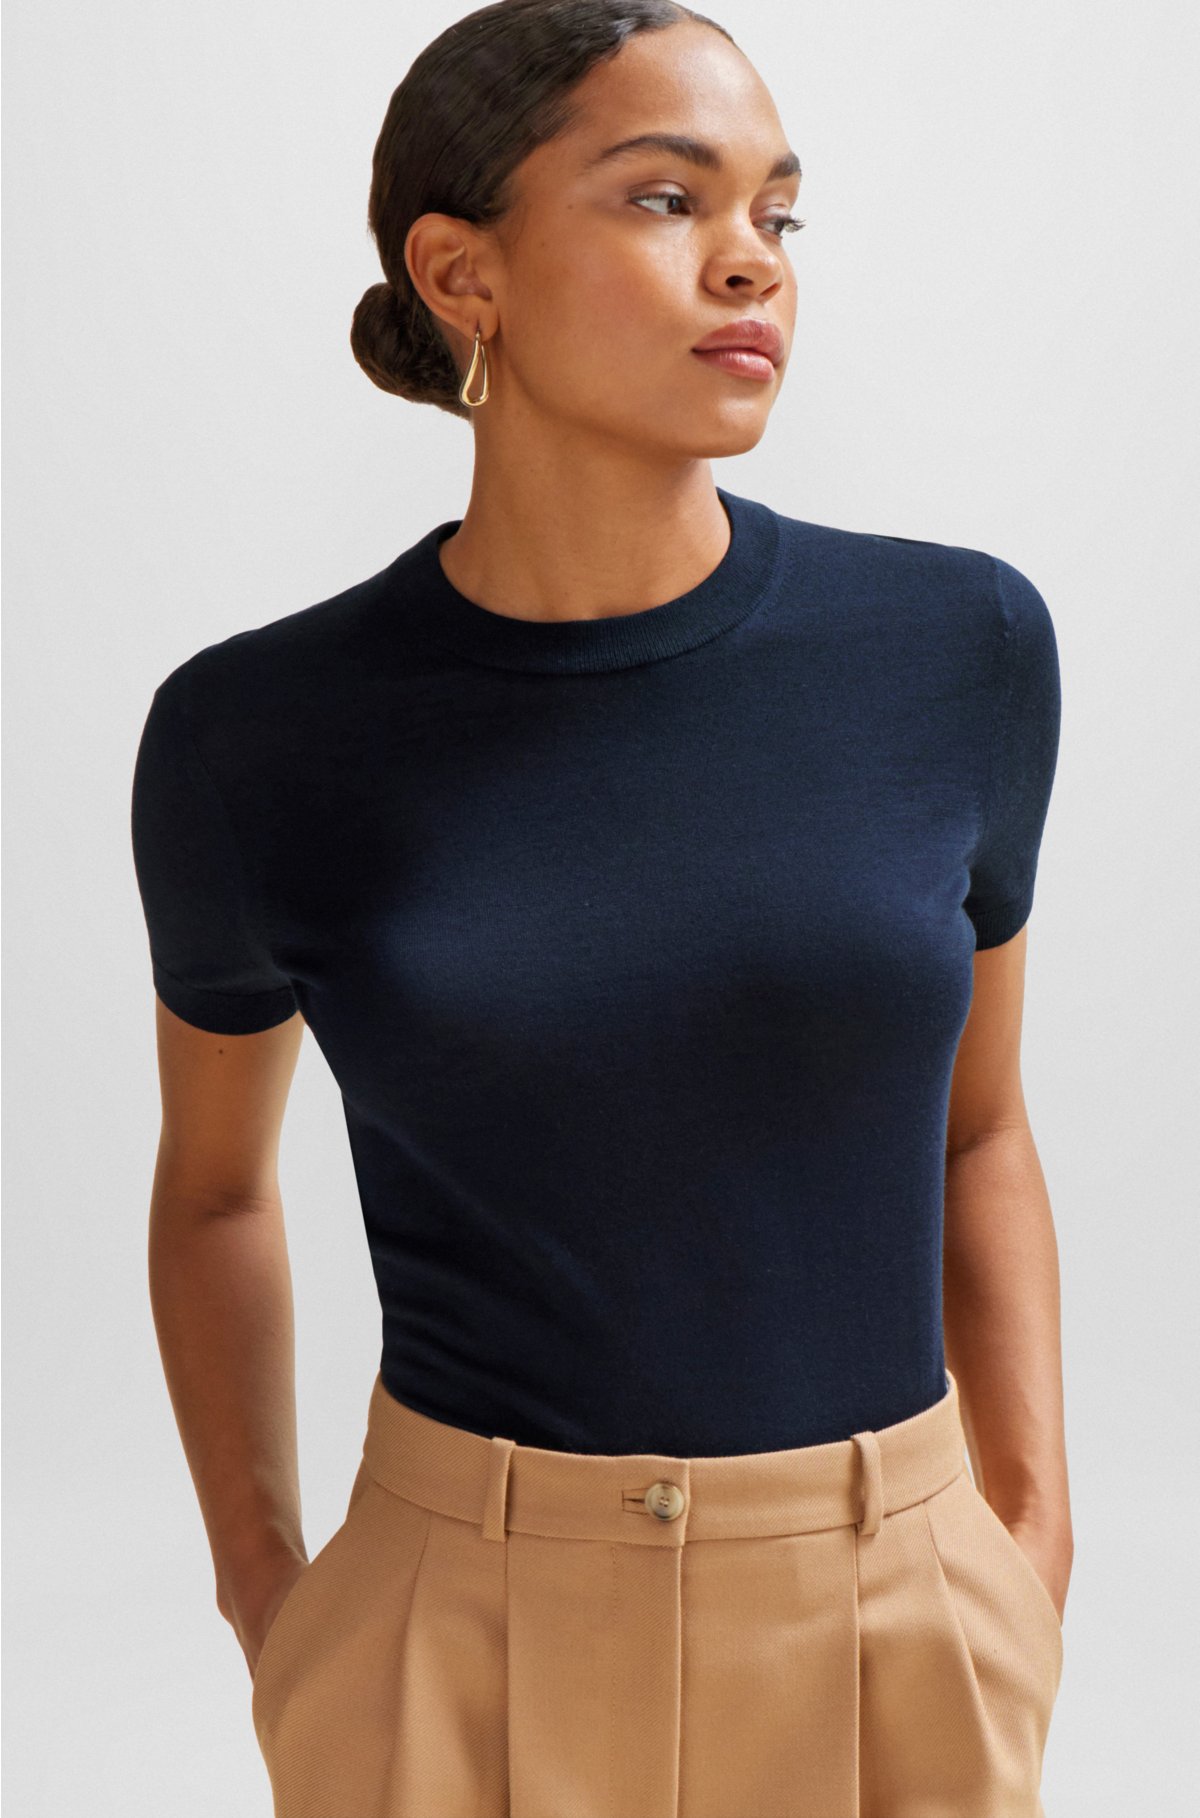 Short-sleeved sweater in Merino wool, Dark Blue